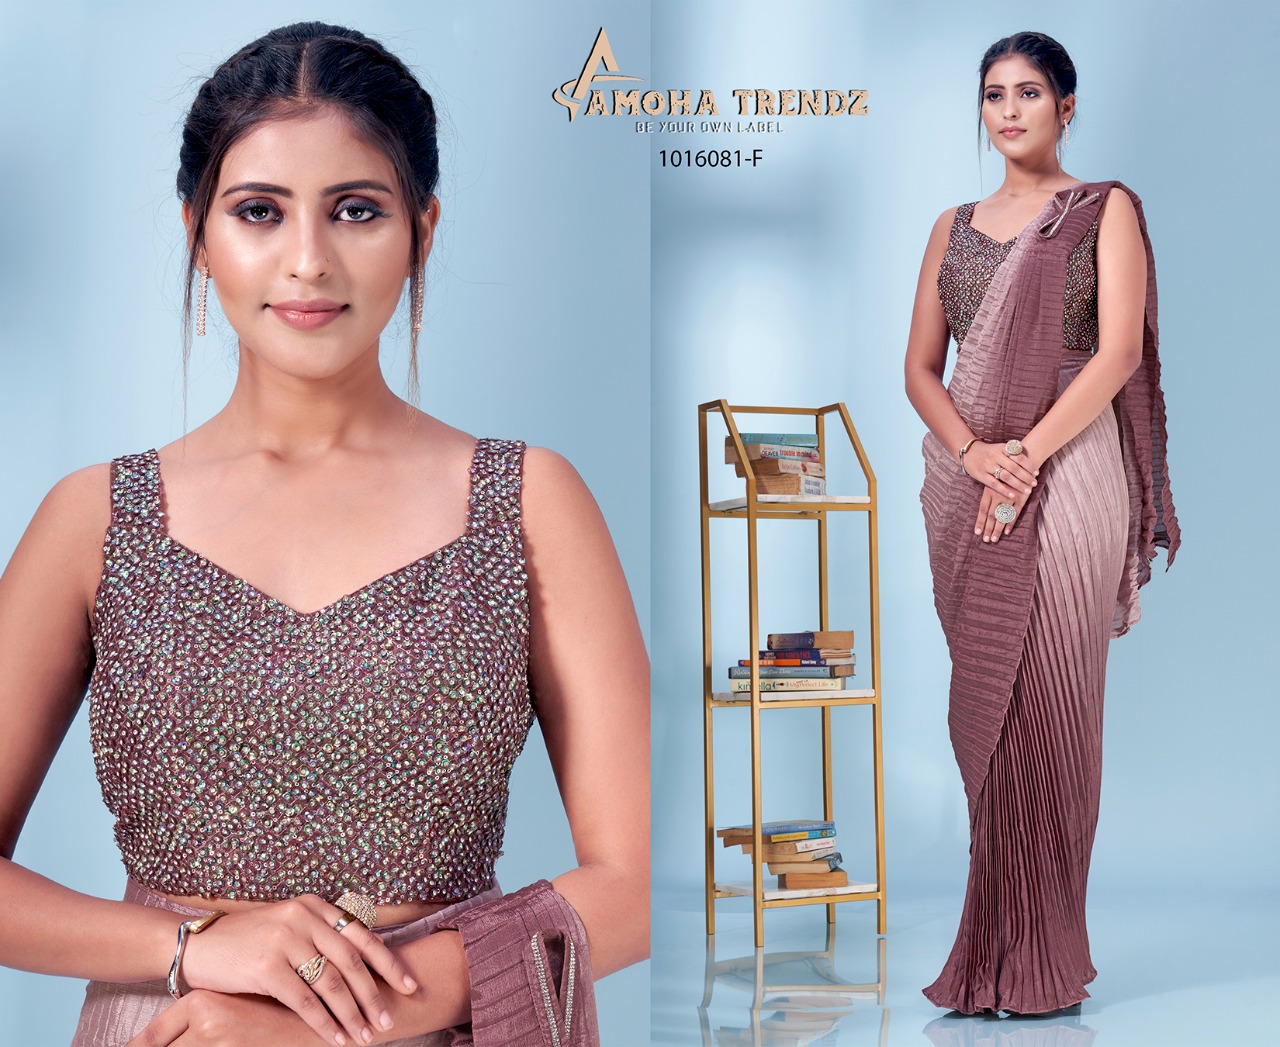 Aamoha Trendz Ready To Wear Designer Saree 1016081-F